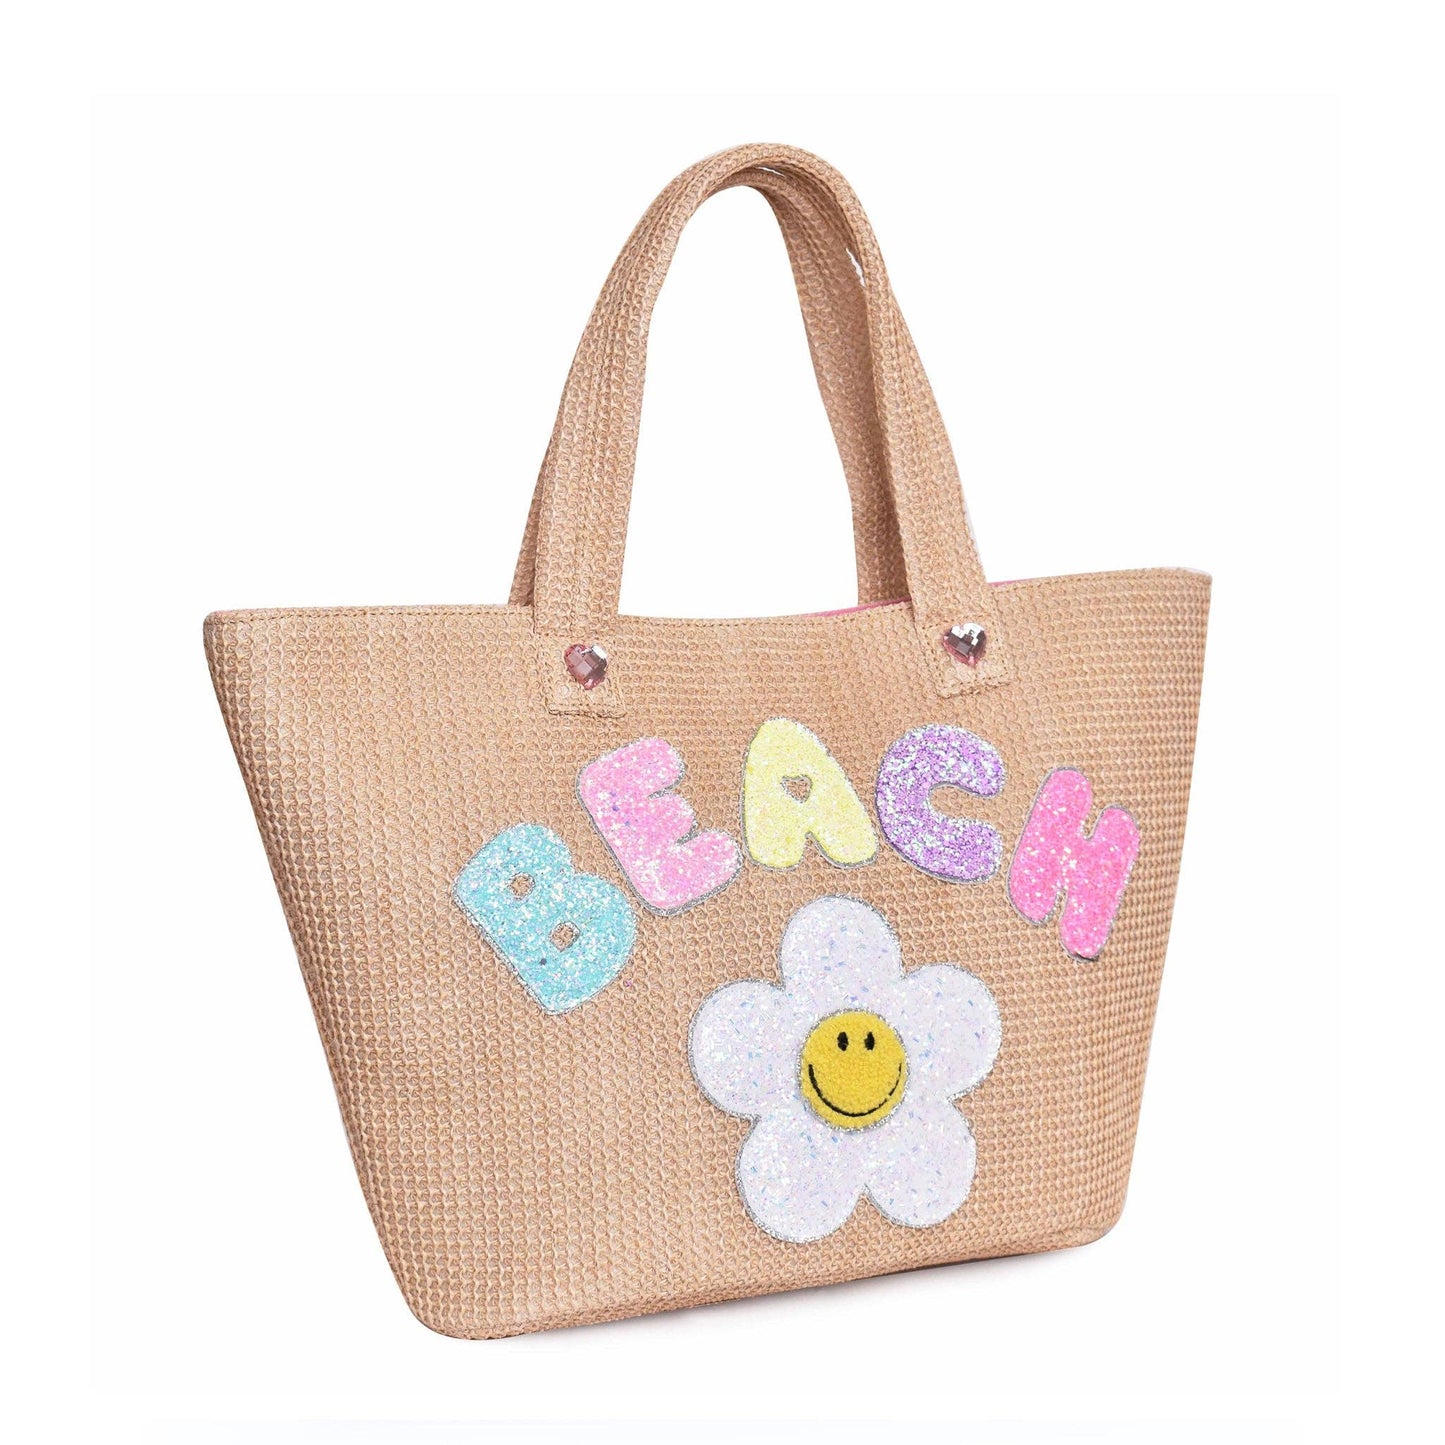 'Beach' Daisy Straw Tote Bag